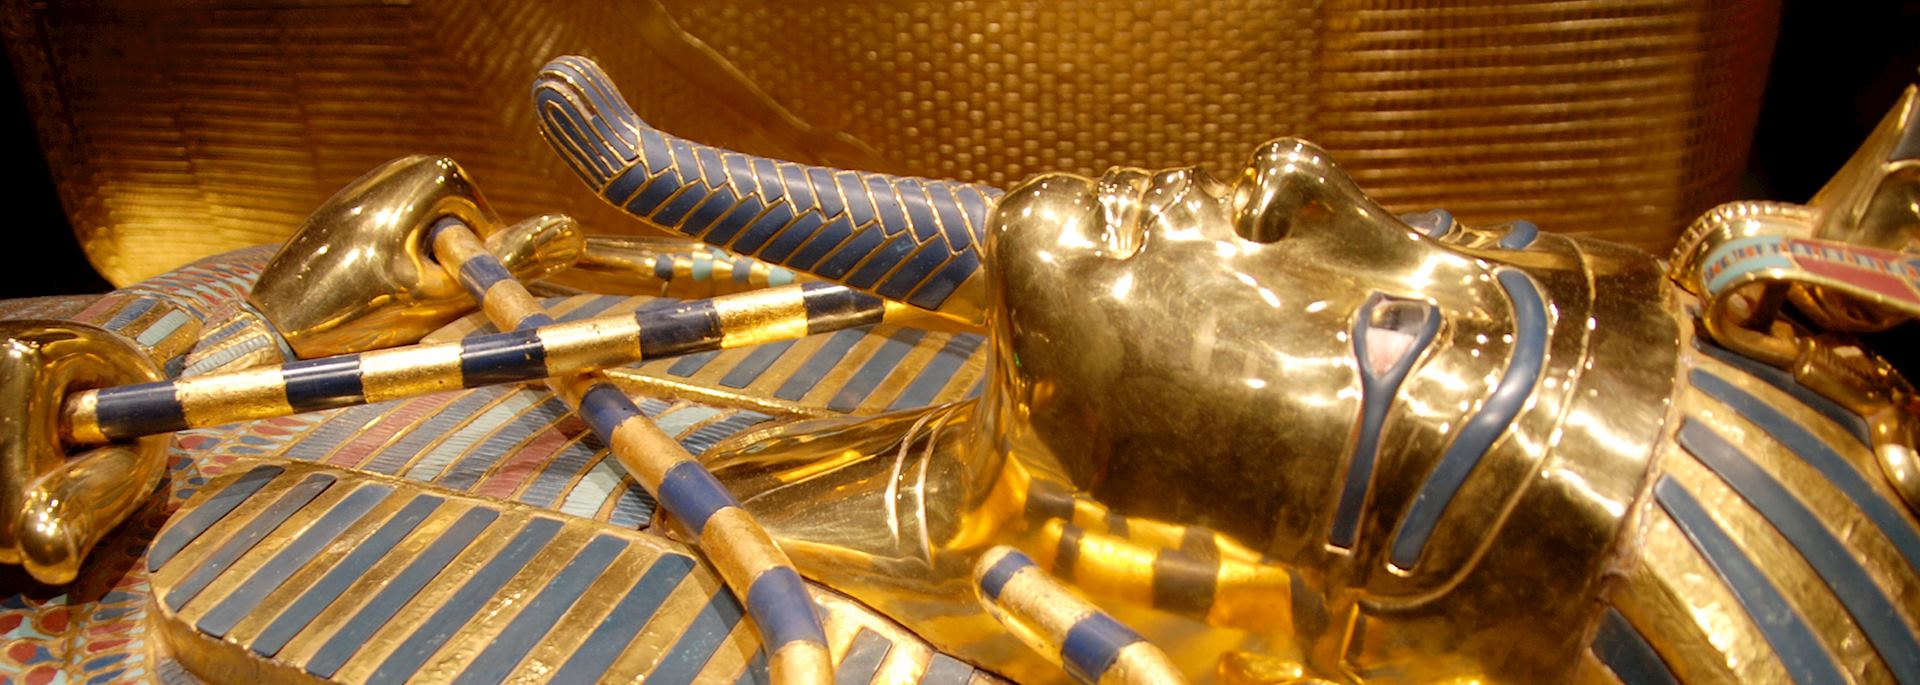 King Tutankhamun's innermost coffin